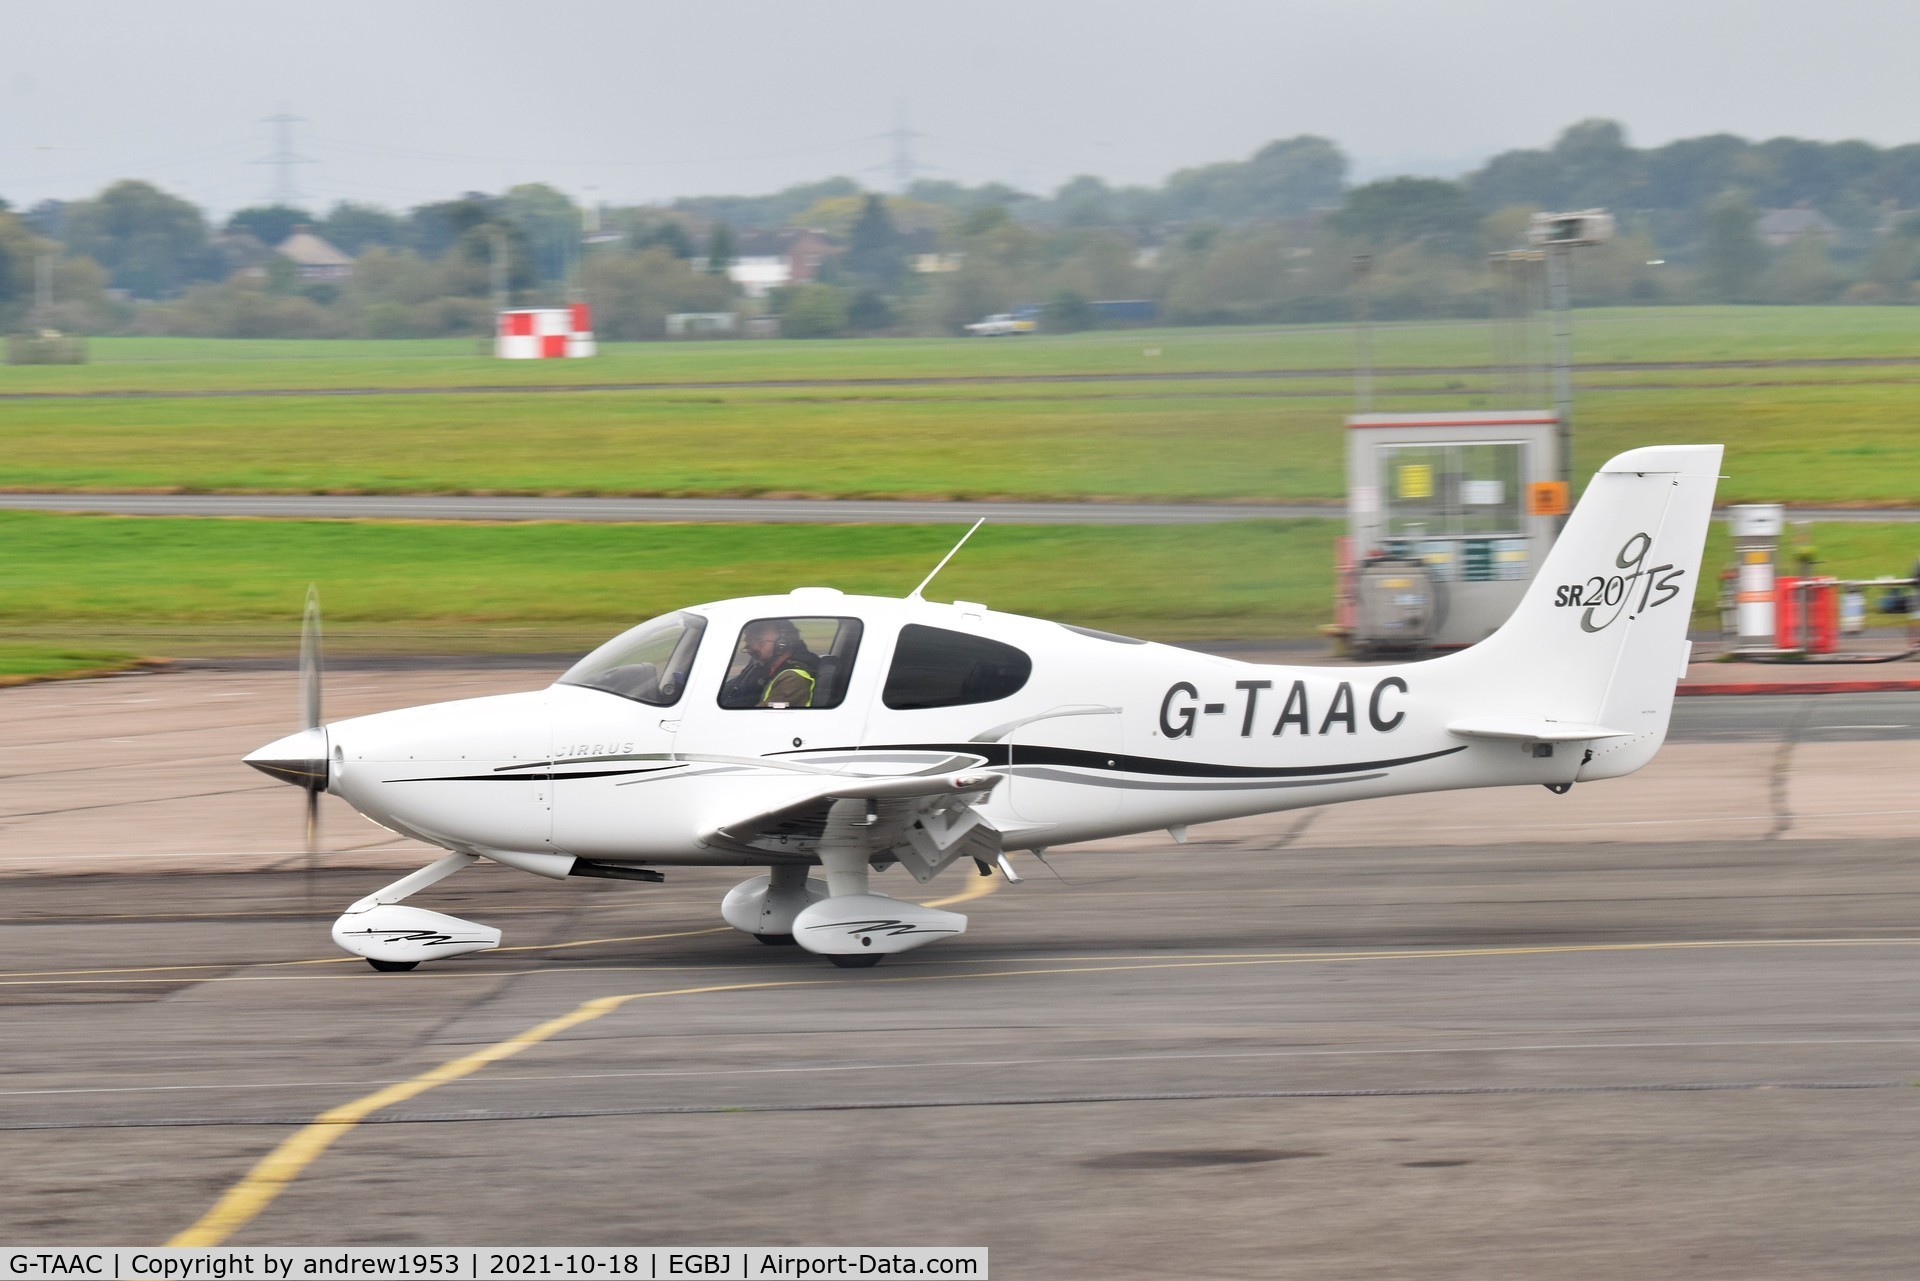 G-TAAC, 2006 Cirrus SR20 GTS C/N 1694, G-TAAC at Gloucestershire Airport.